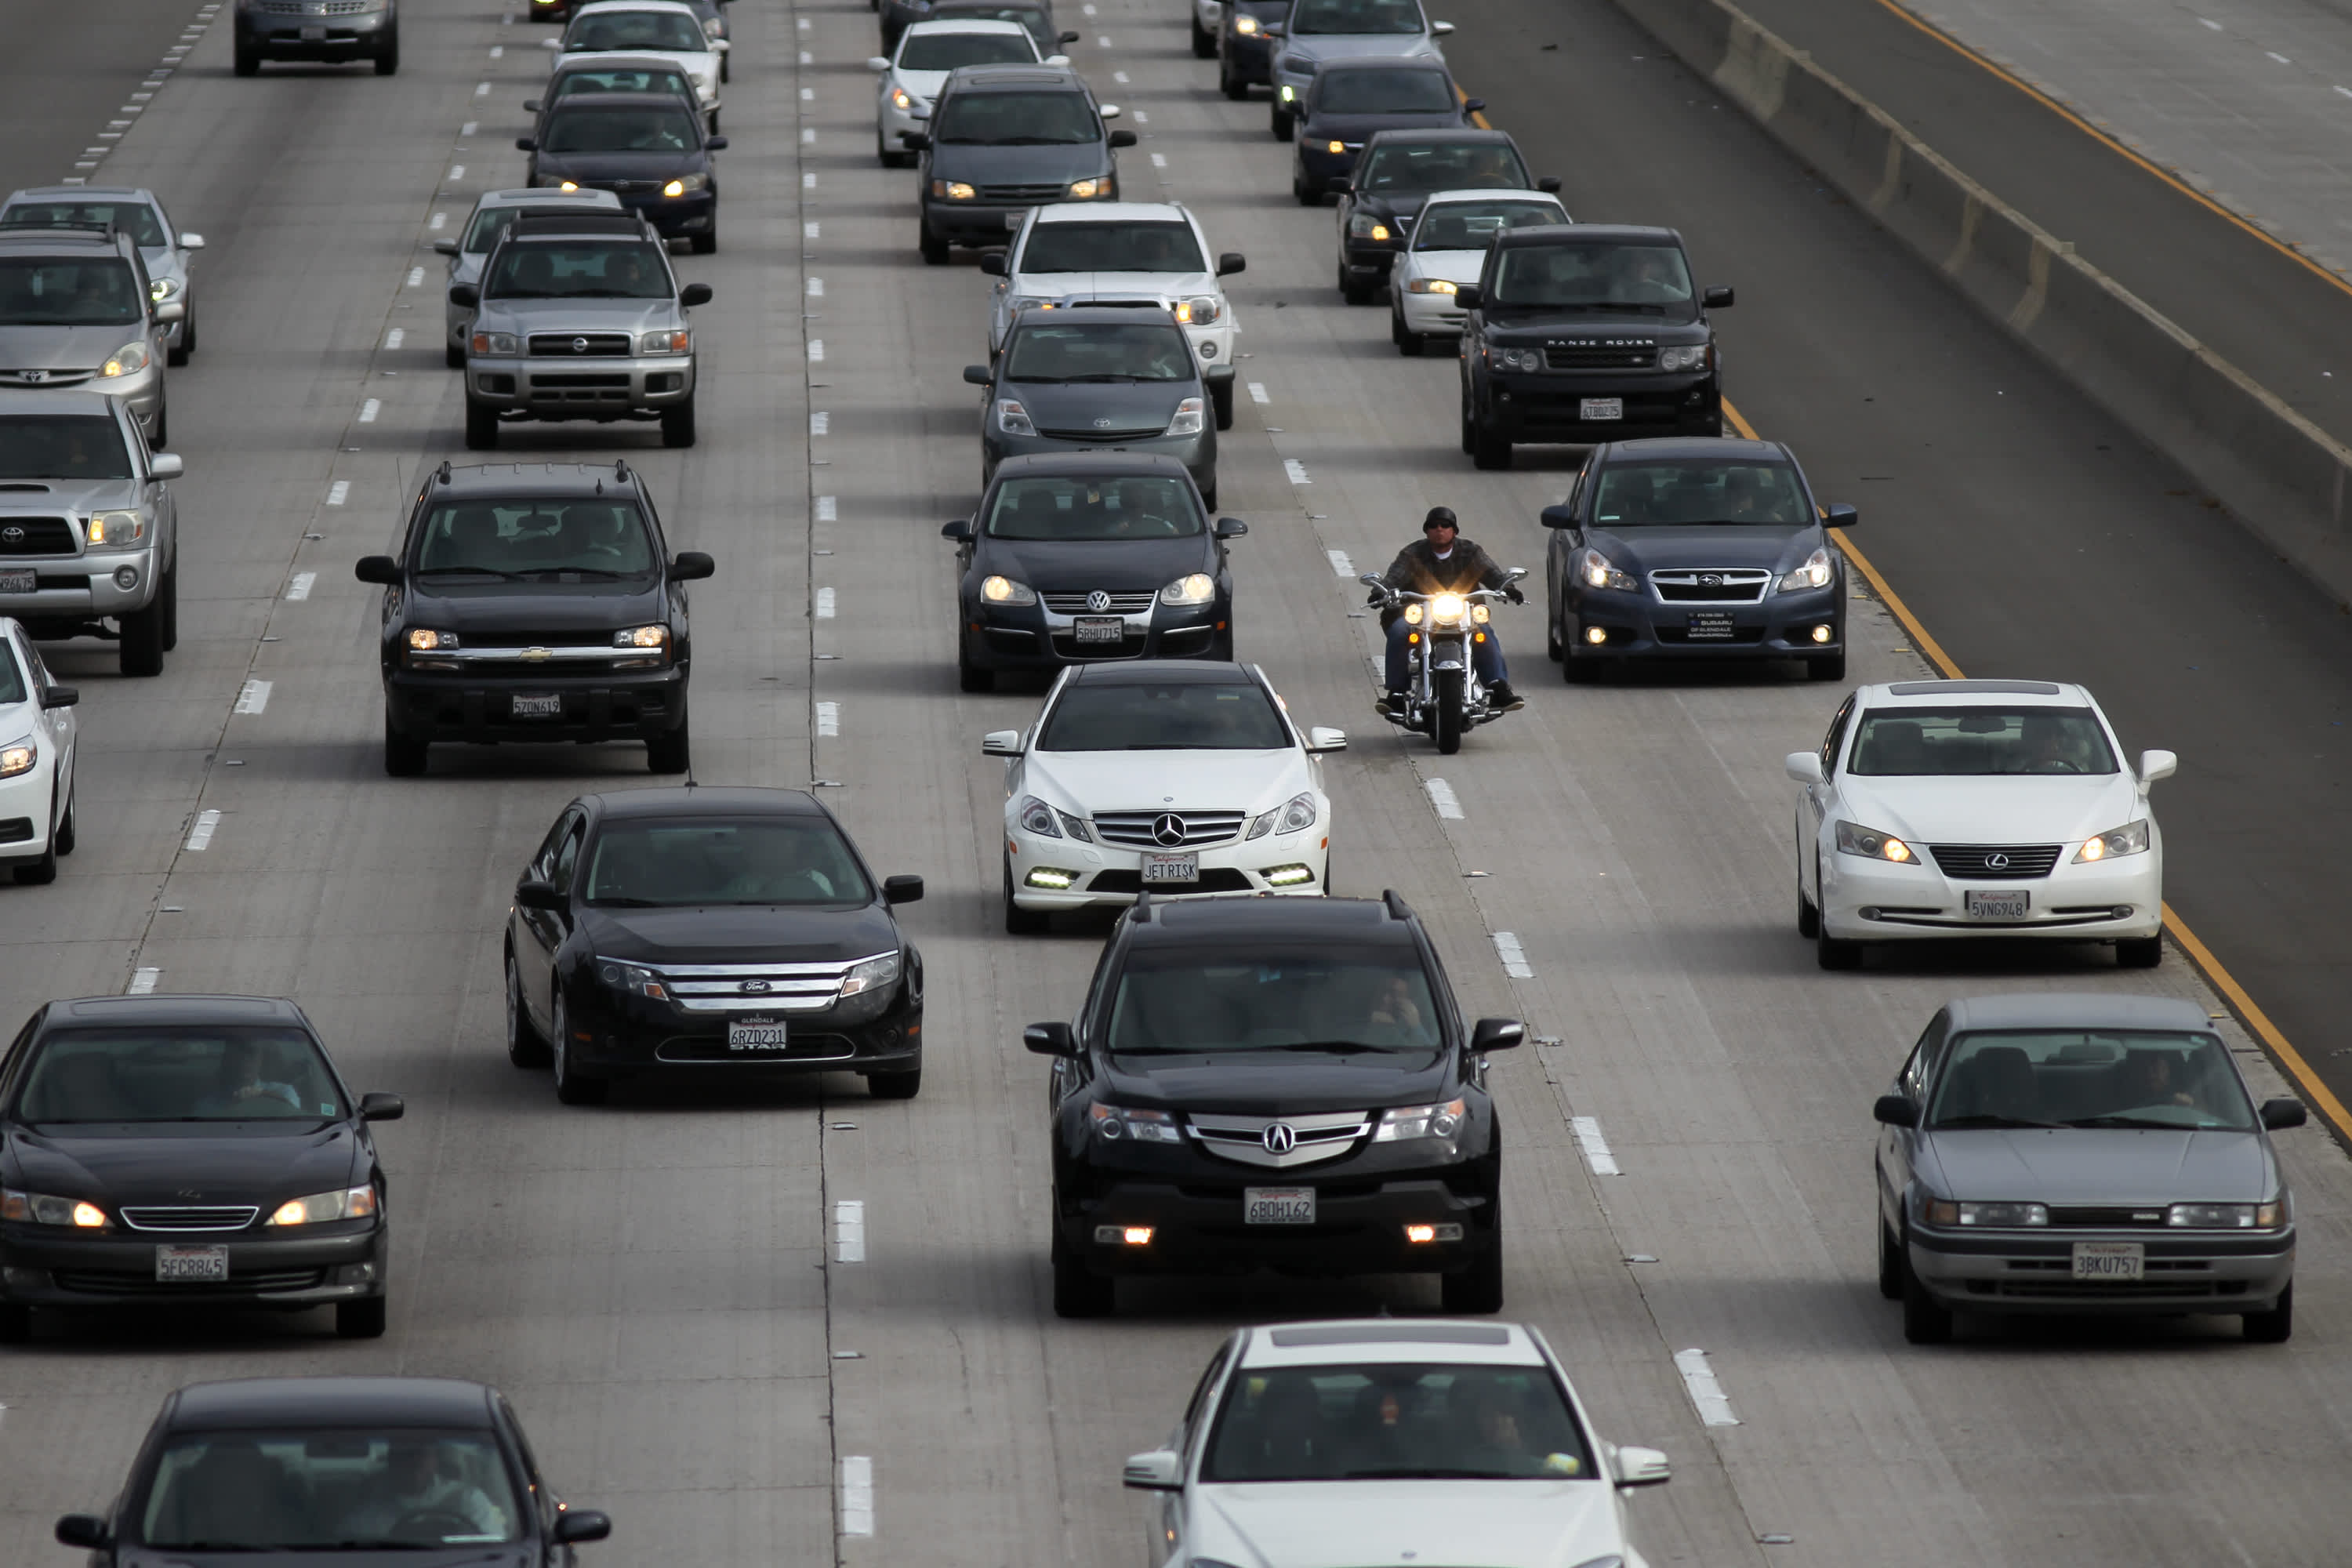 Average age of cars on U.S. roads breaks record